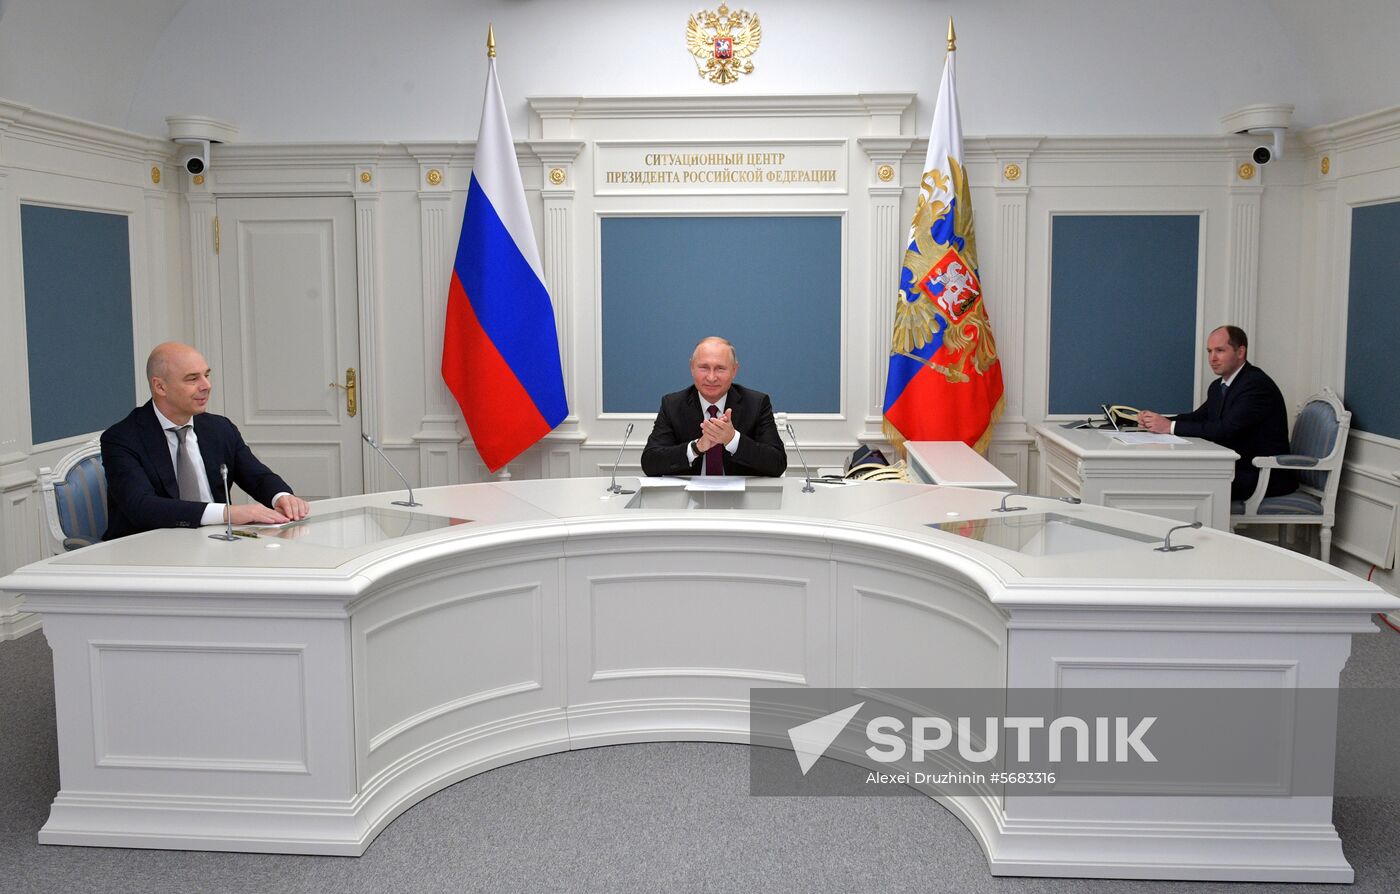 President Vladimir Putin takes part in launch of Verkhne-Munskoye diamond field